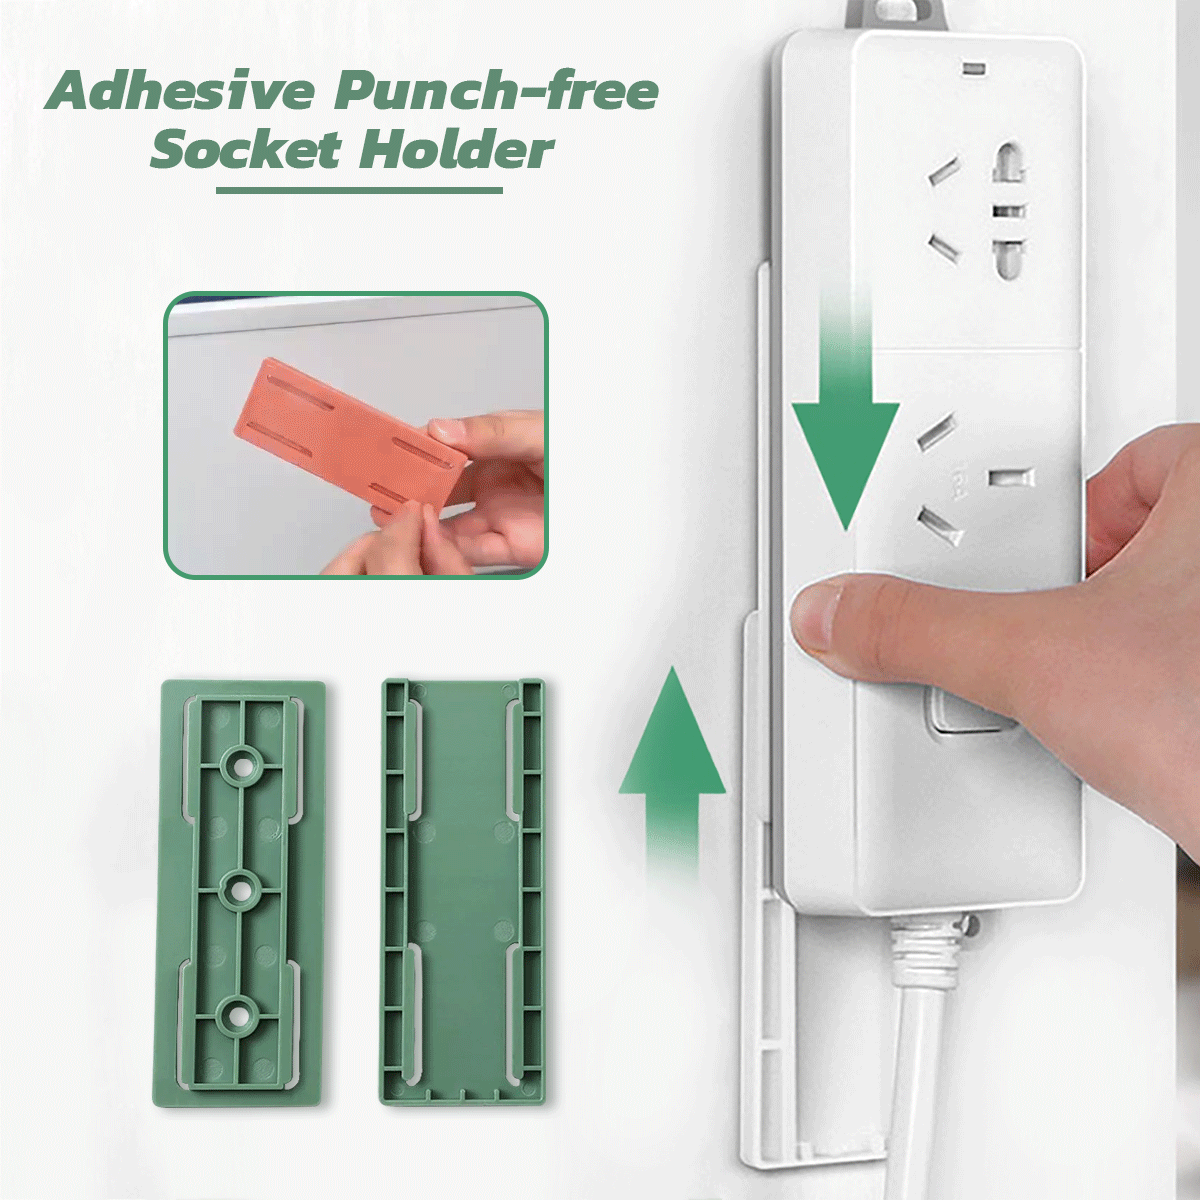 Adhesive Punch-free Socket Holder